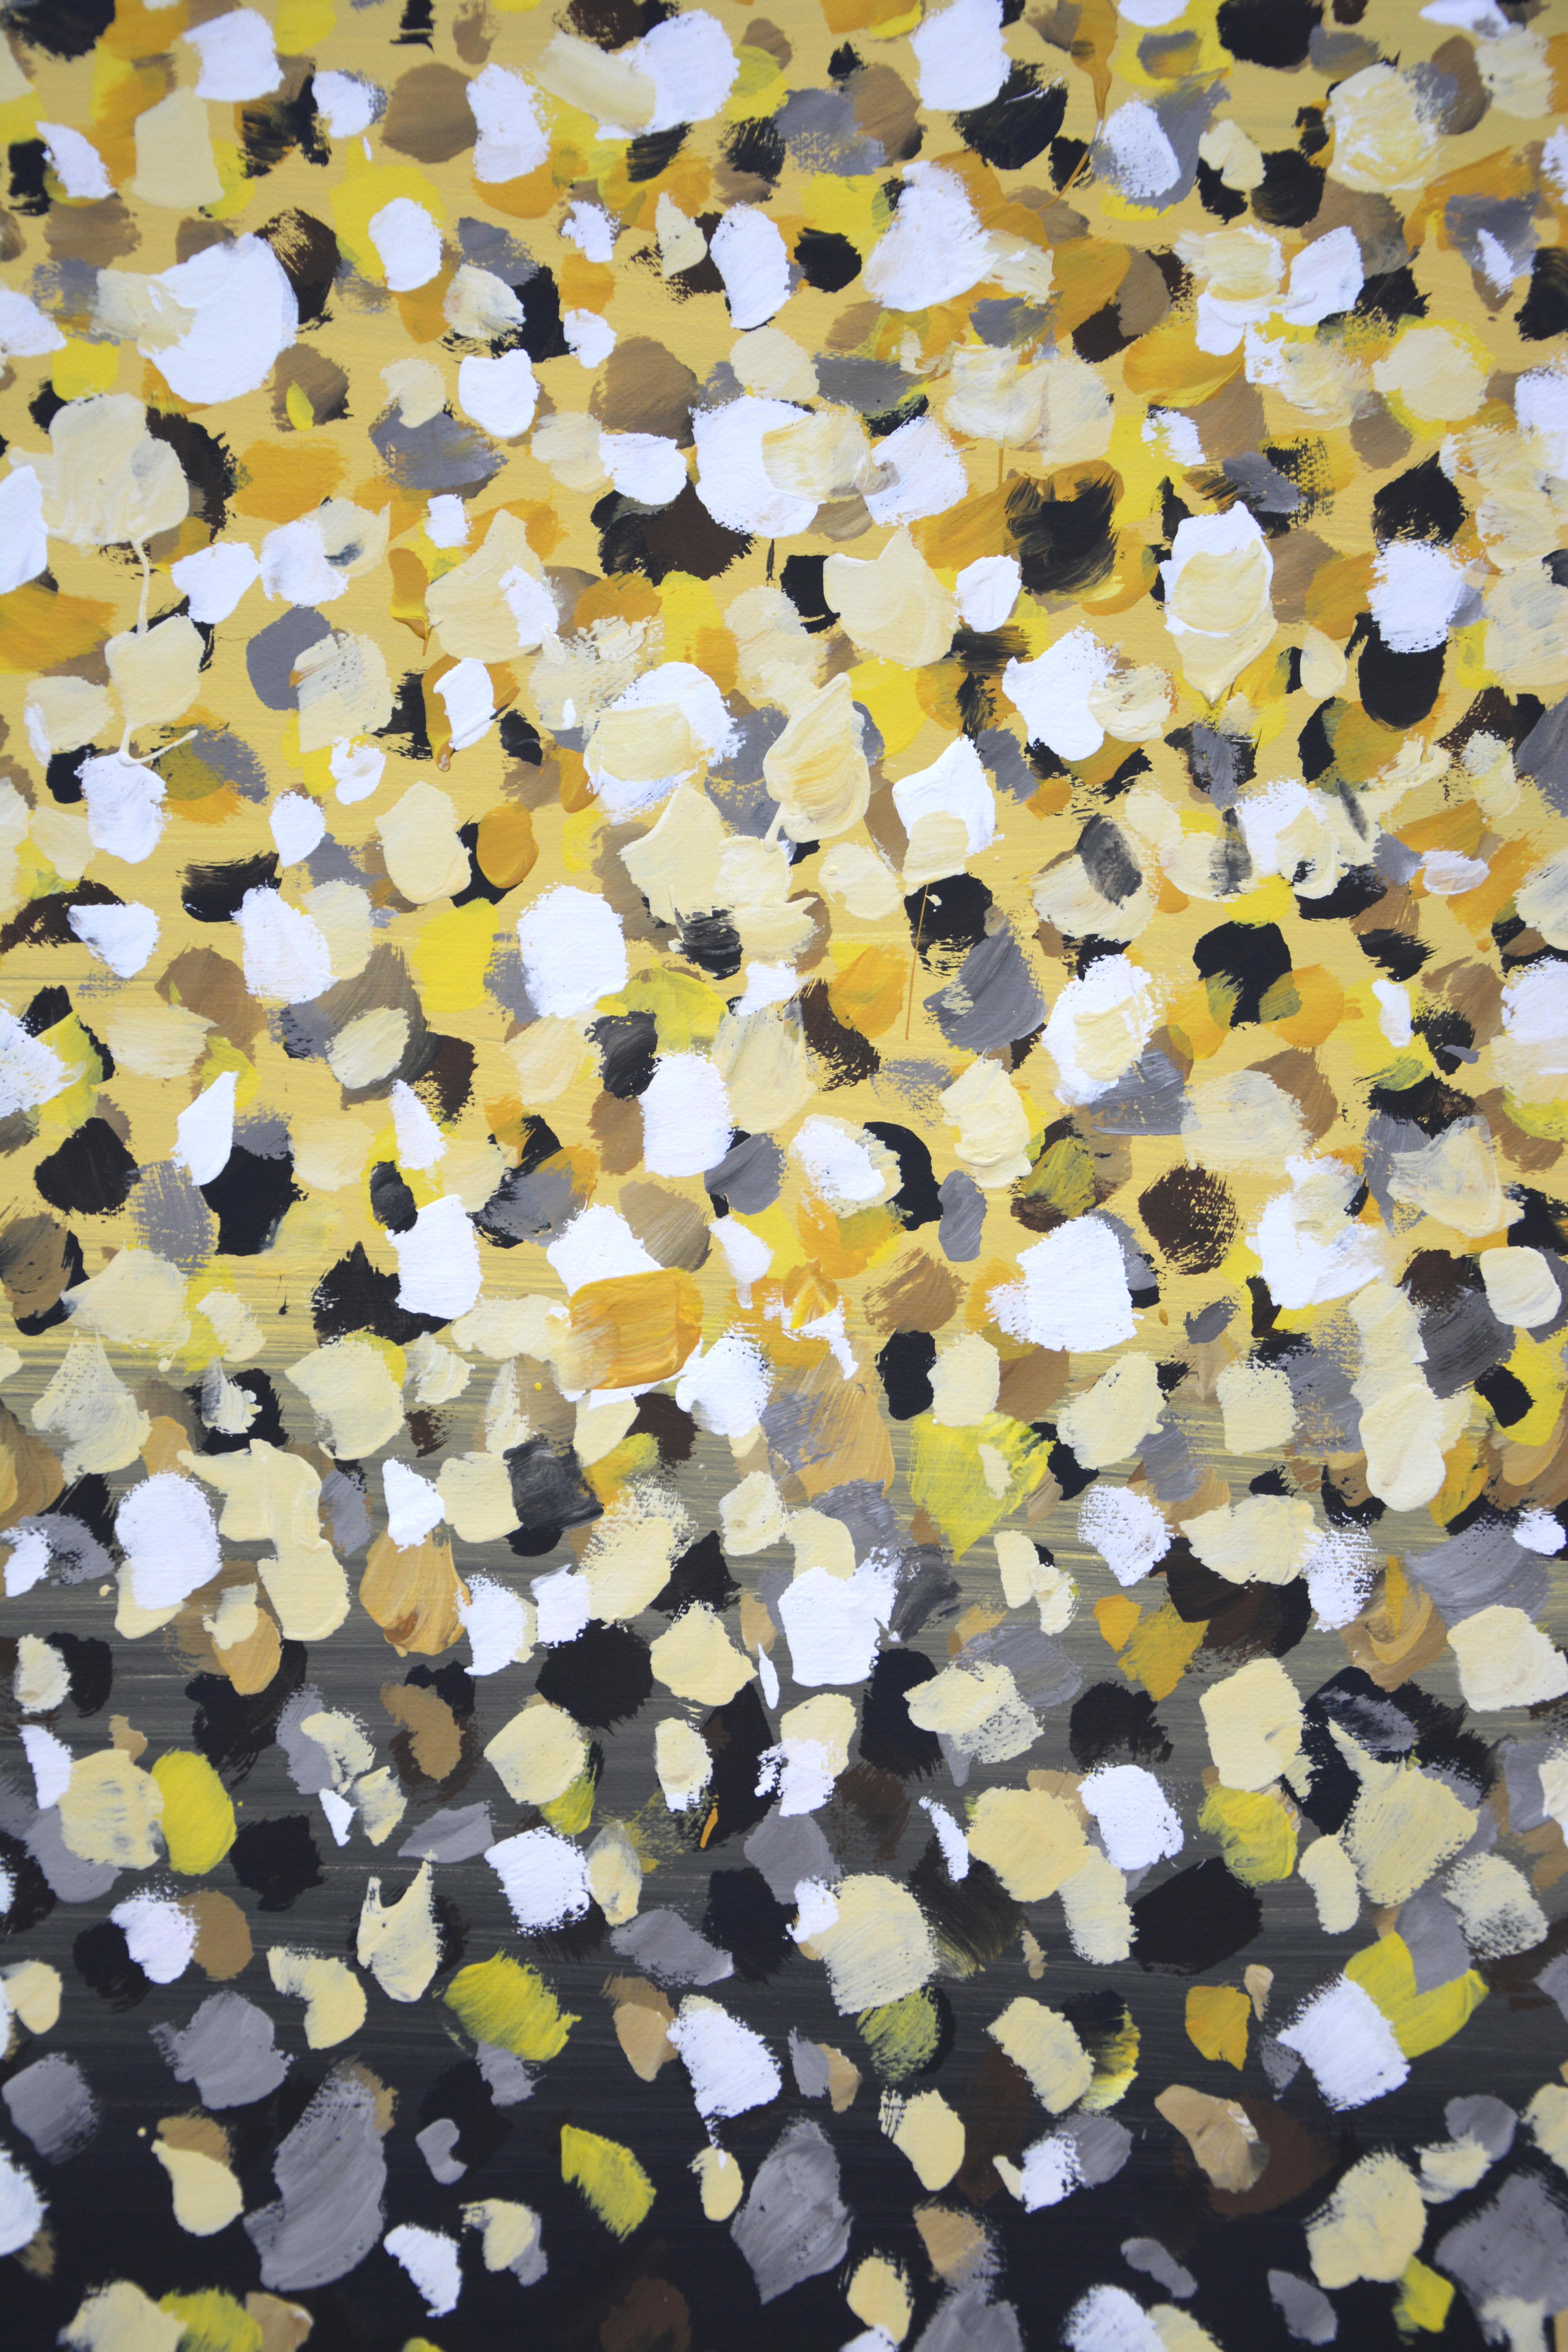 Poantillism. Glare. Interior Painting Modern Design with Black Gold Yellow Dots 3